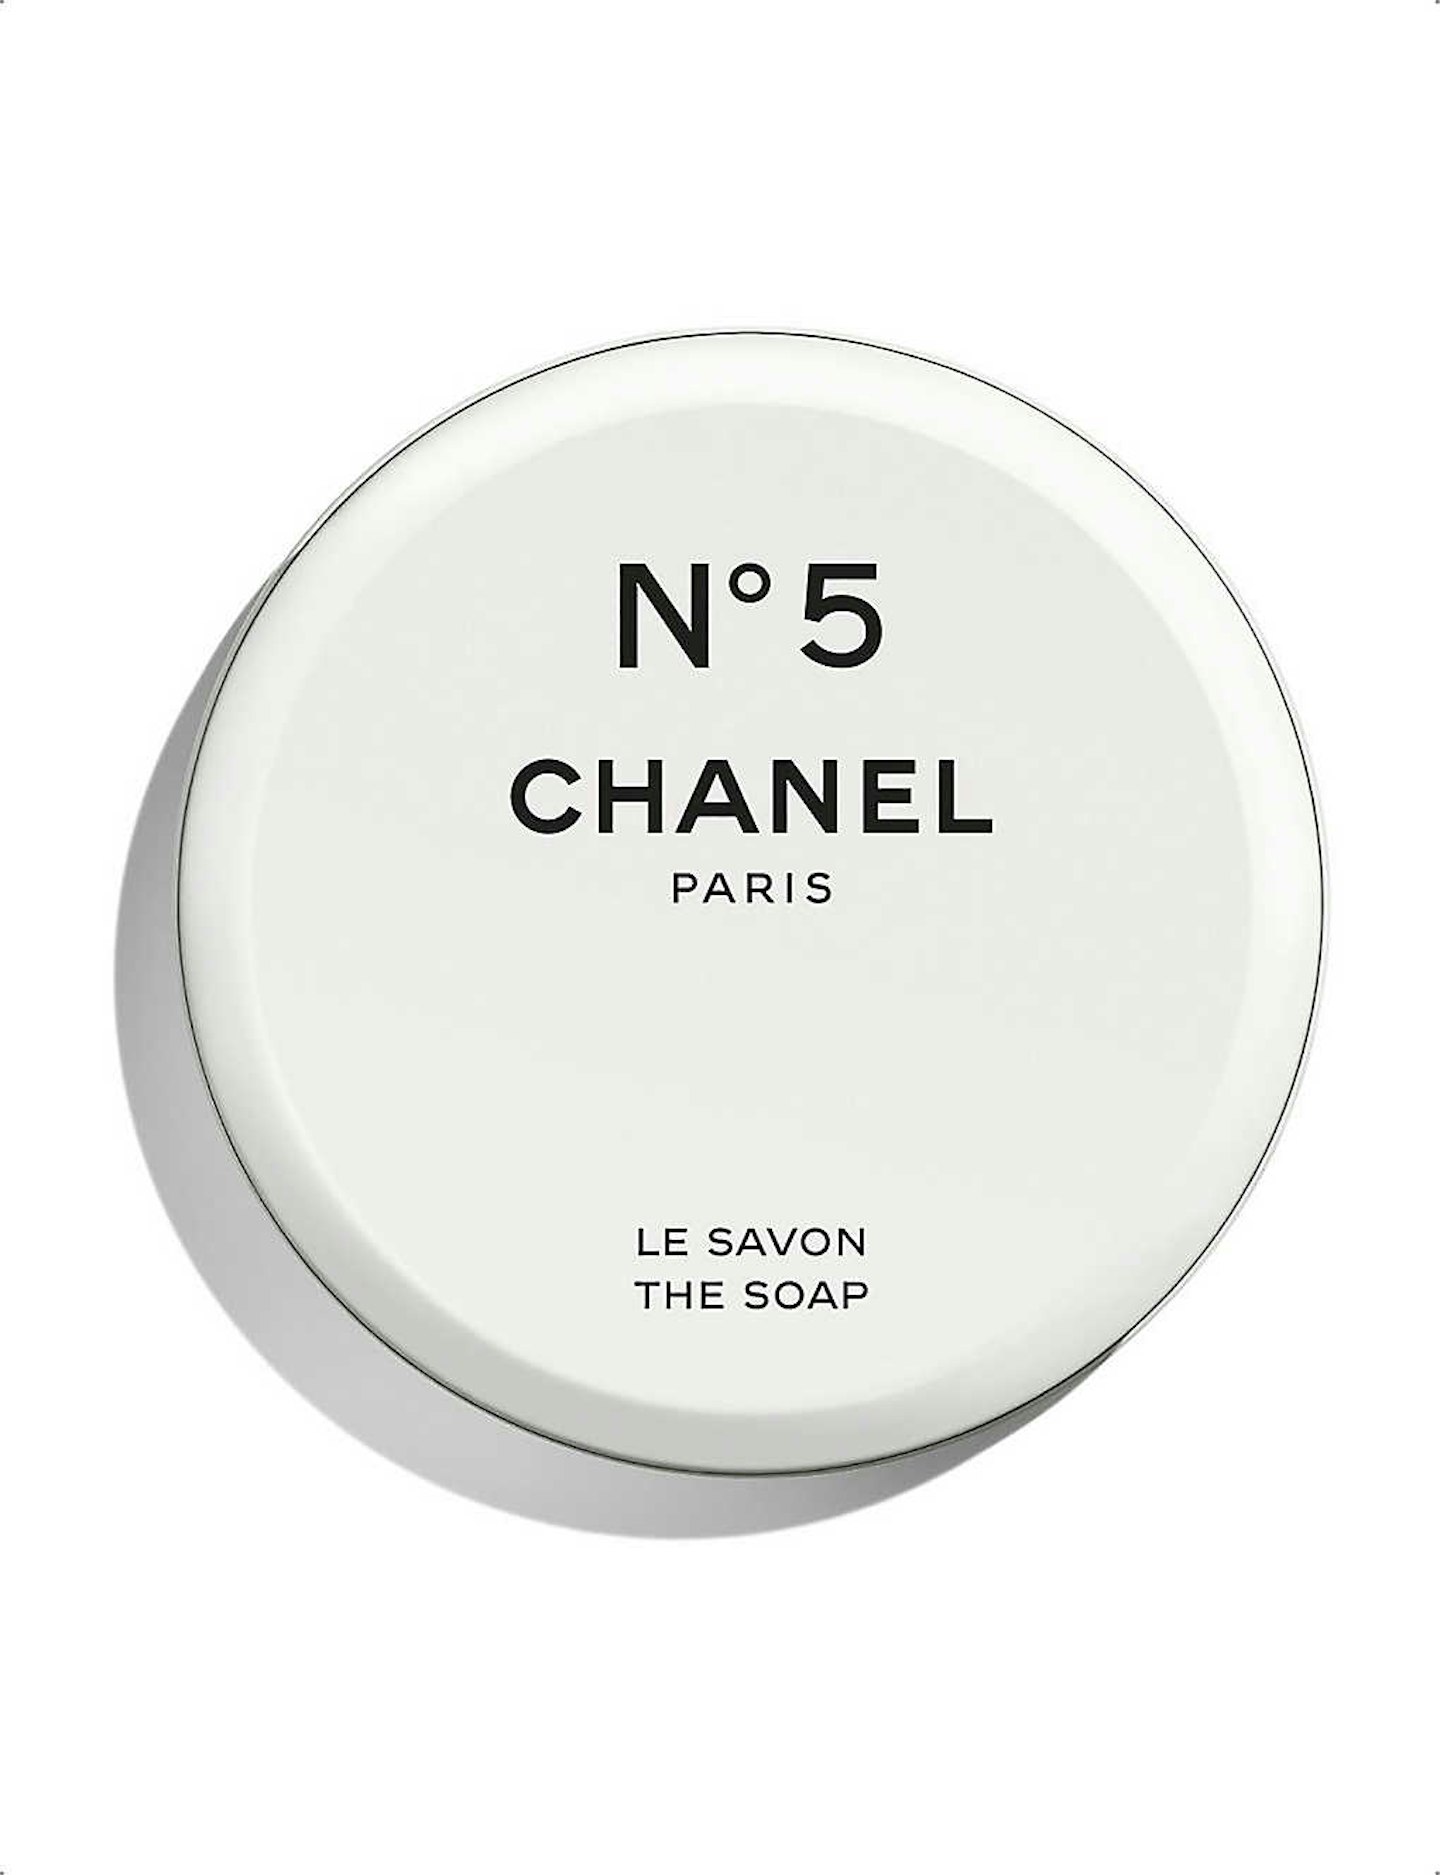 Visit The Chanel Factory 5 Selfridges Pop-Up